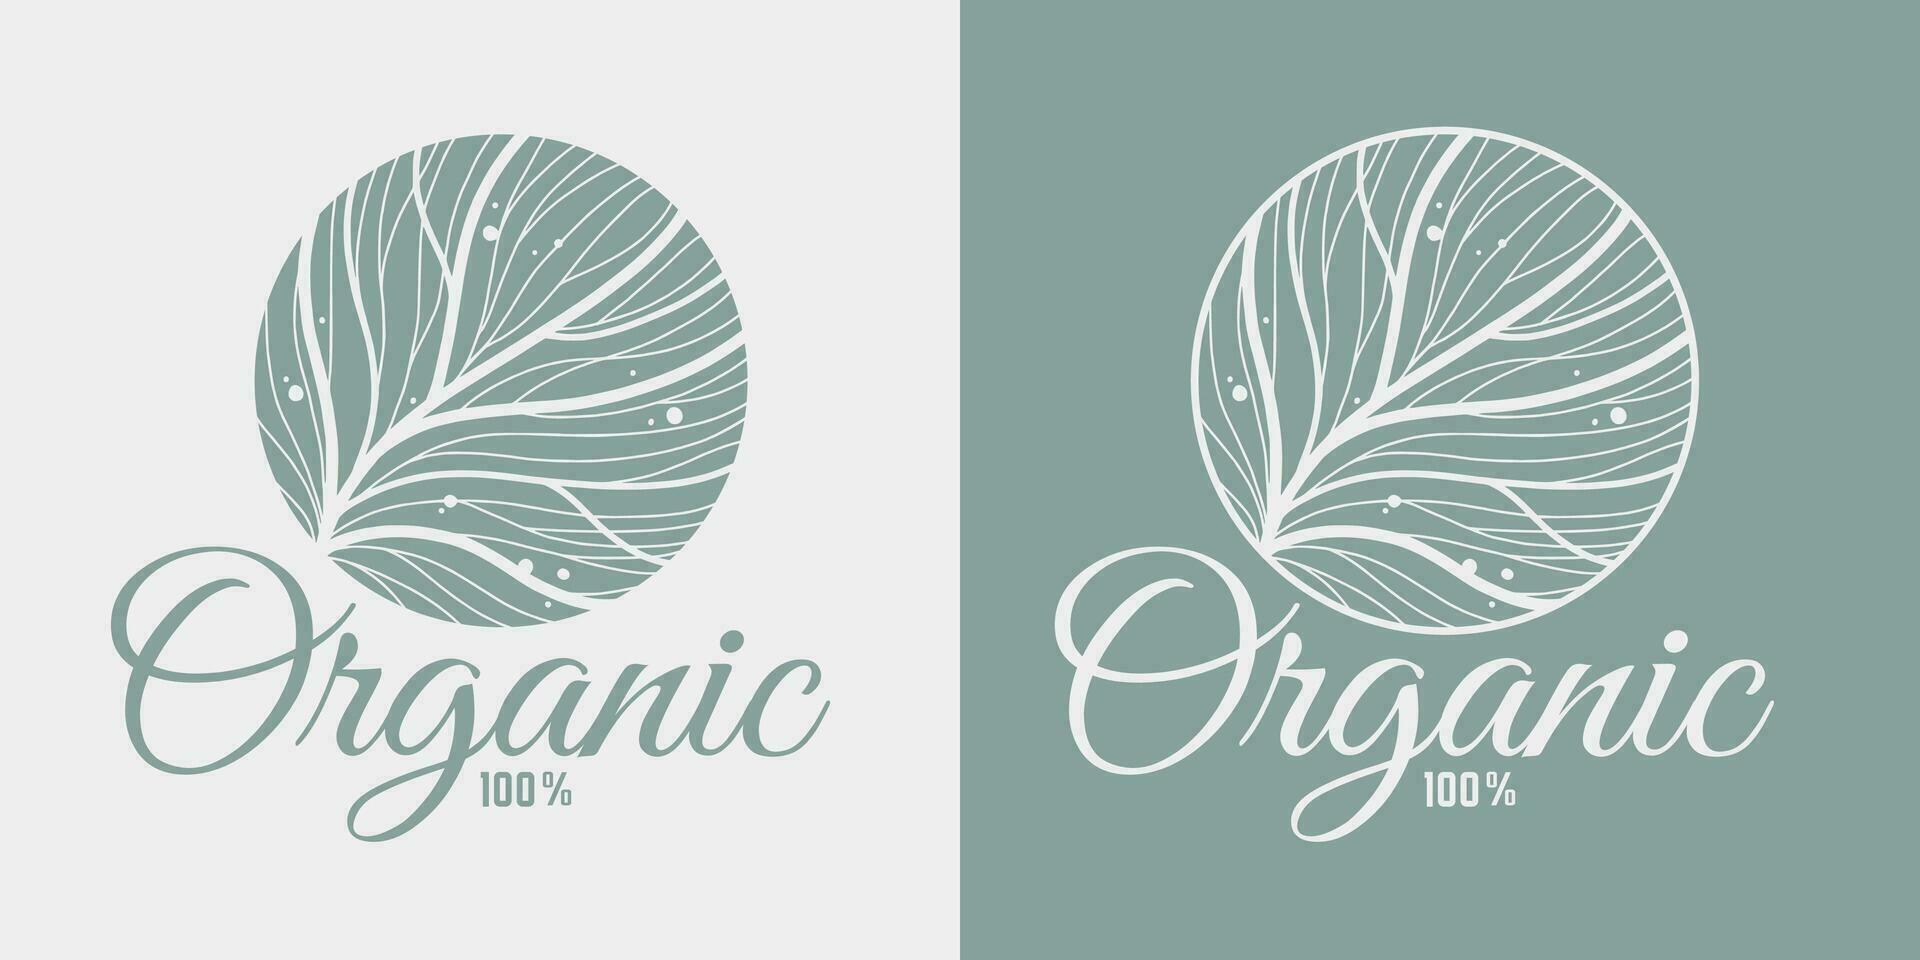 Organic healthy food label, natural vegan and vegetarian ecologic product emblem vector